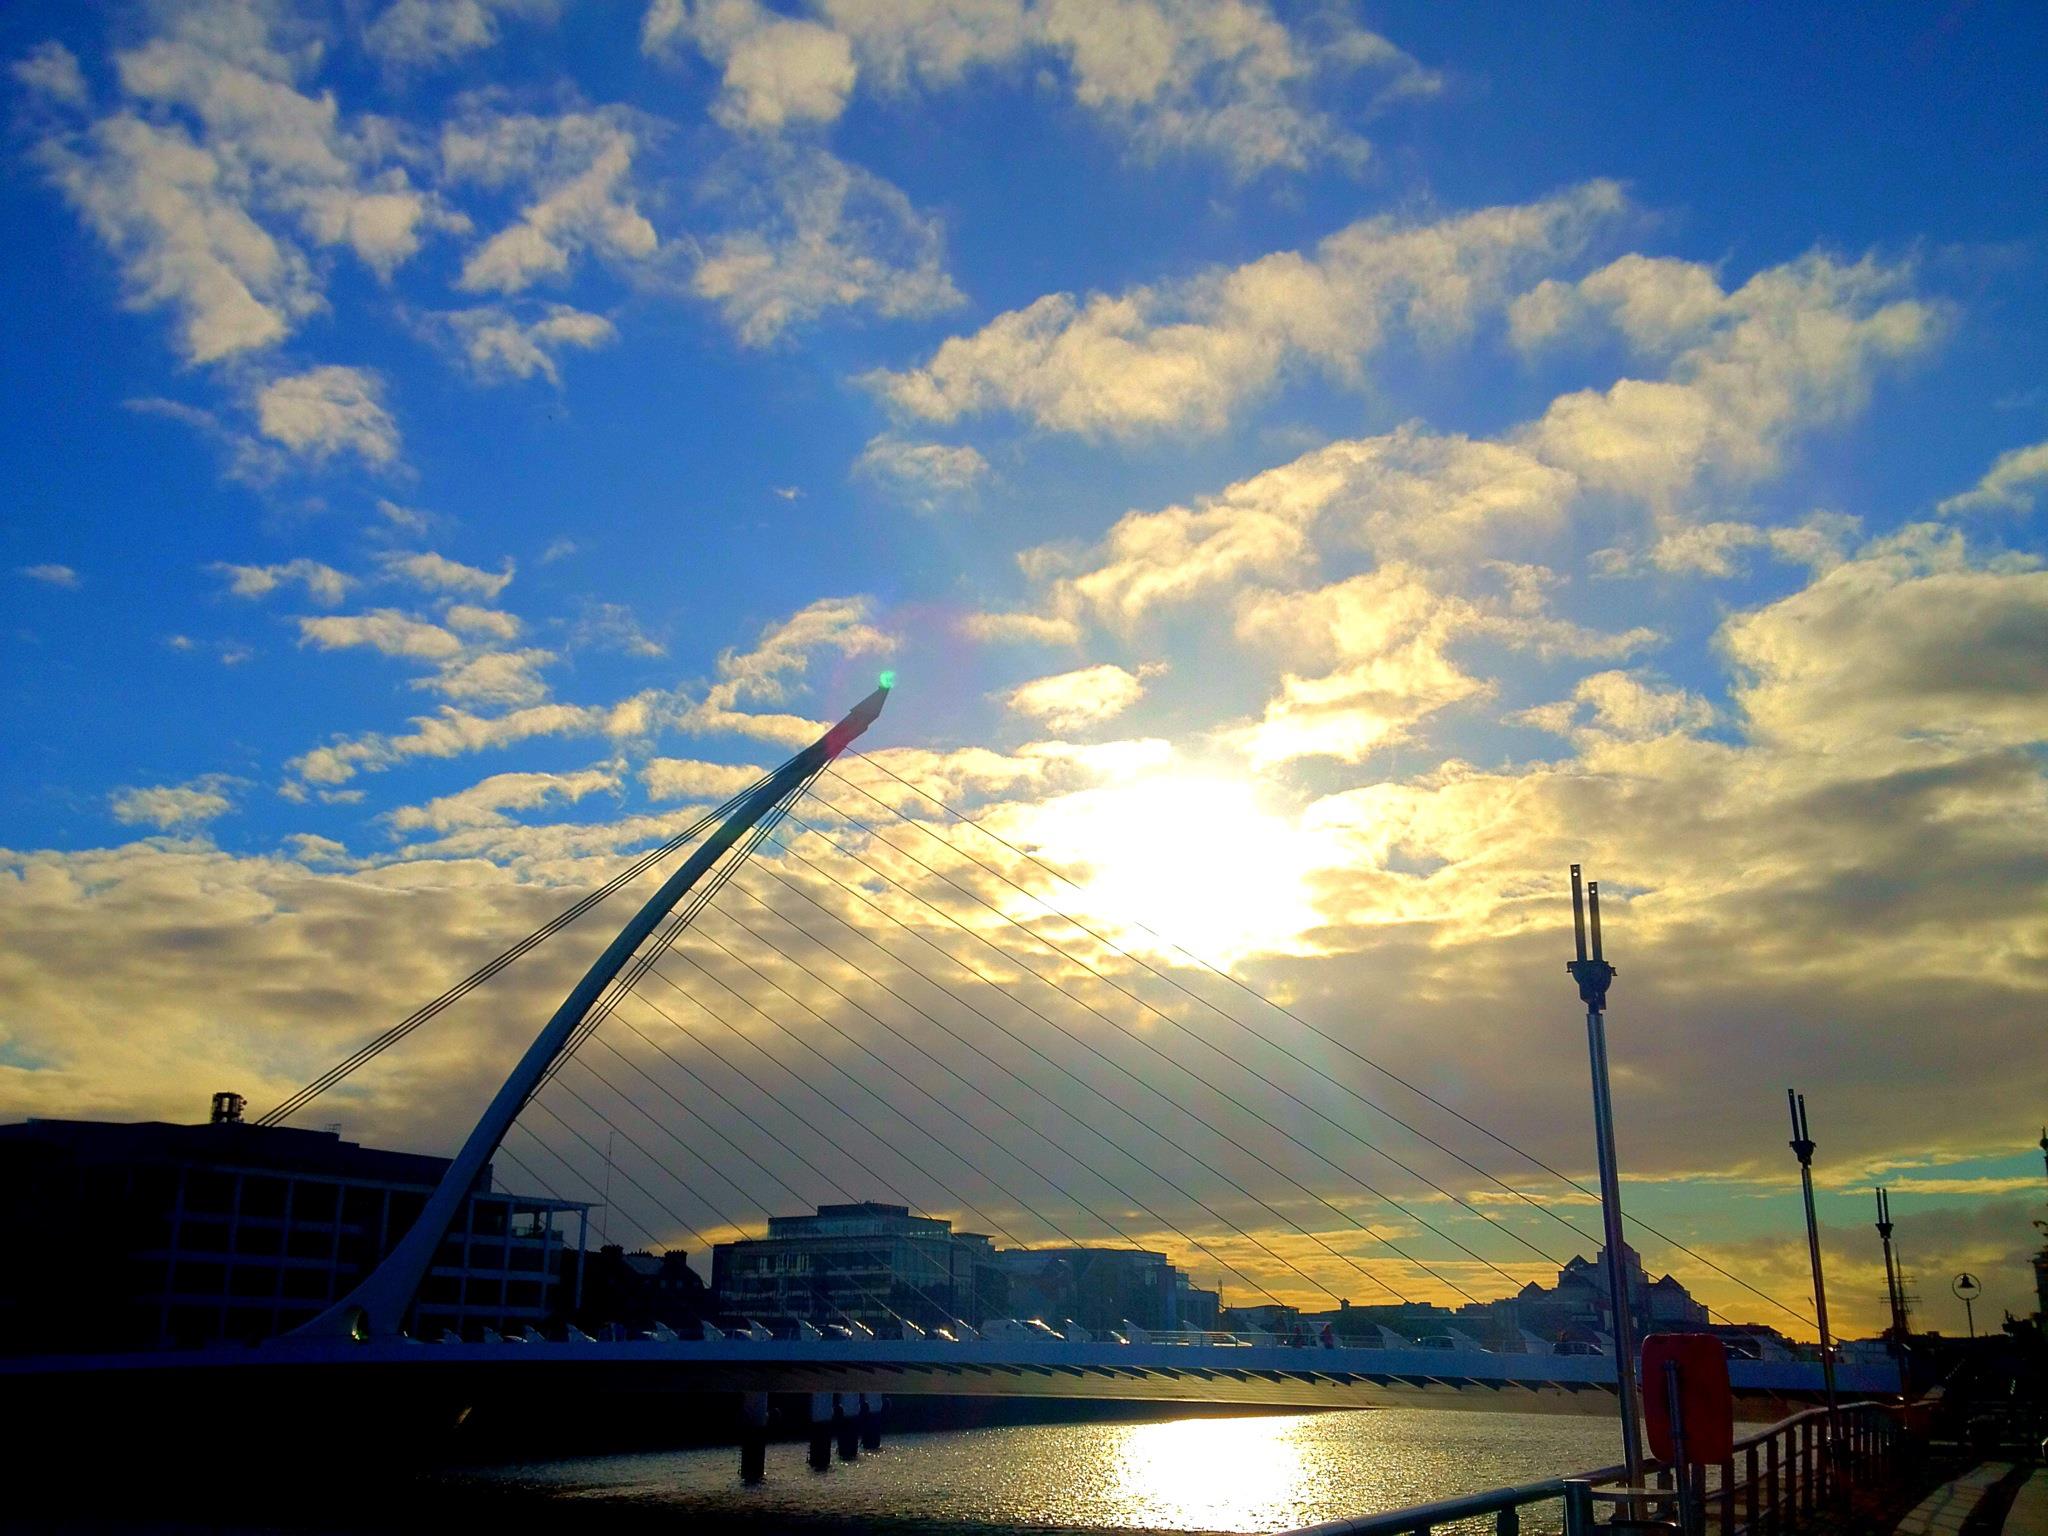 Samuel Beckett Bridge, Dublin (ダブリン), Ireland 🇮🇪